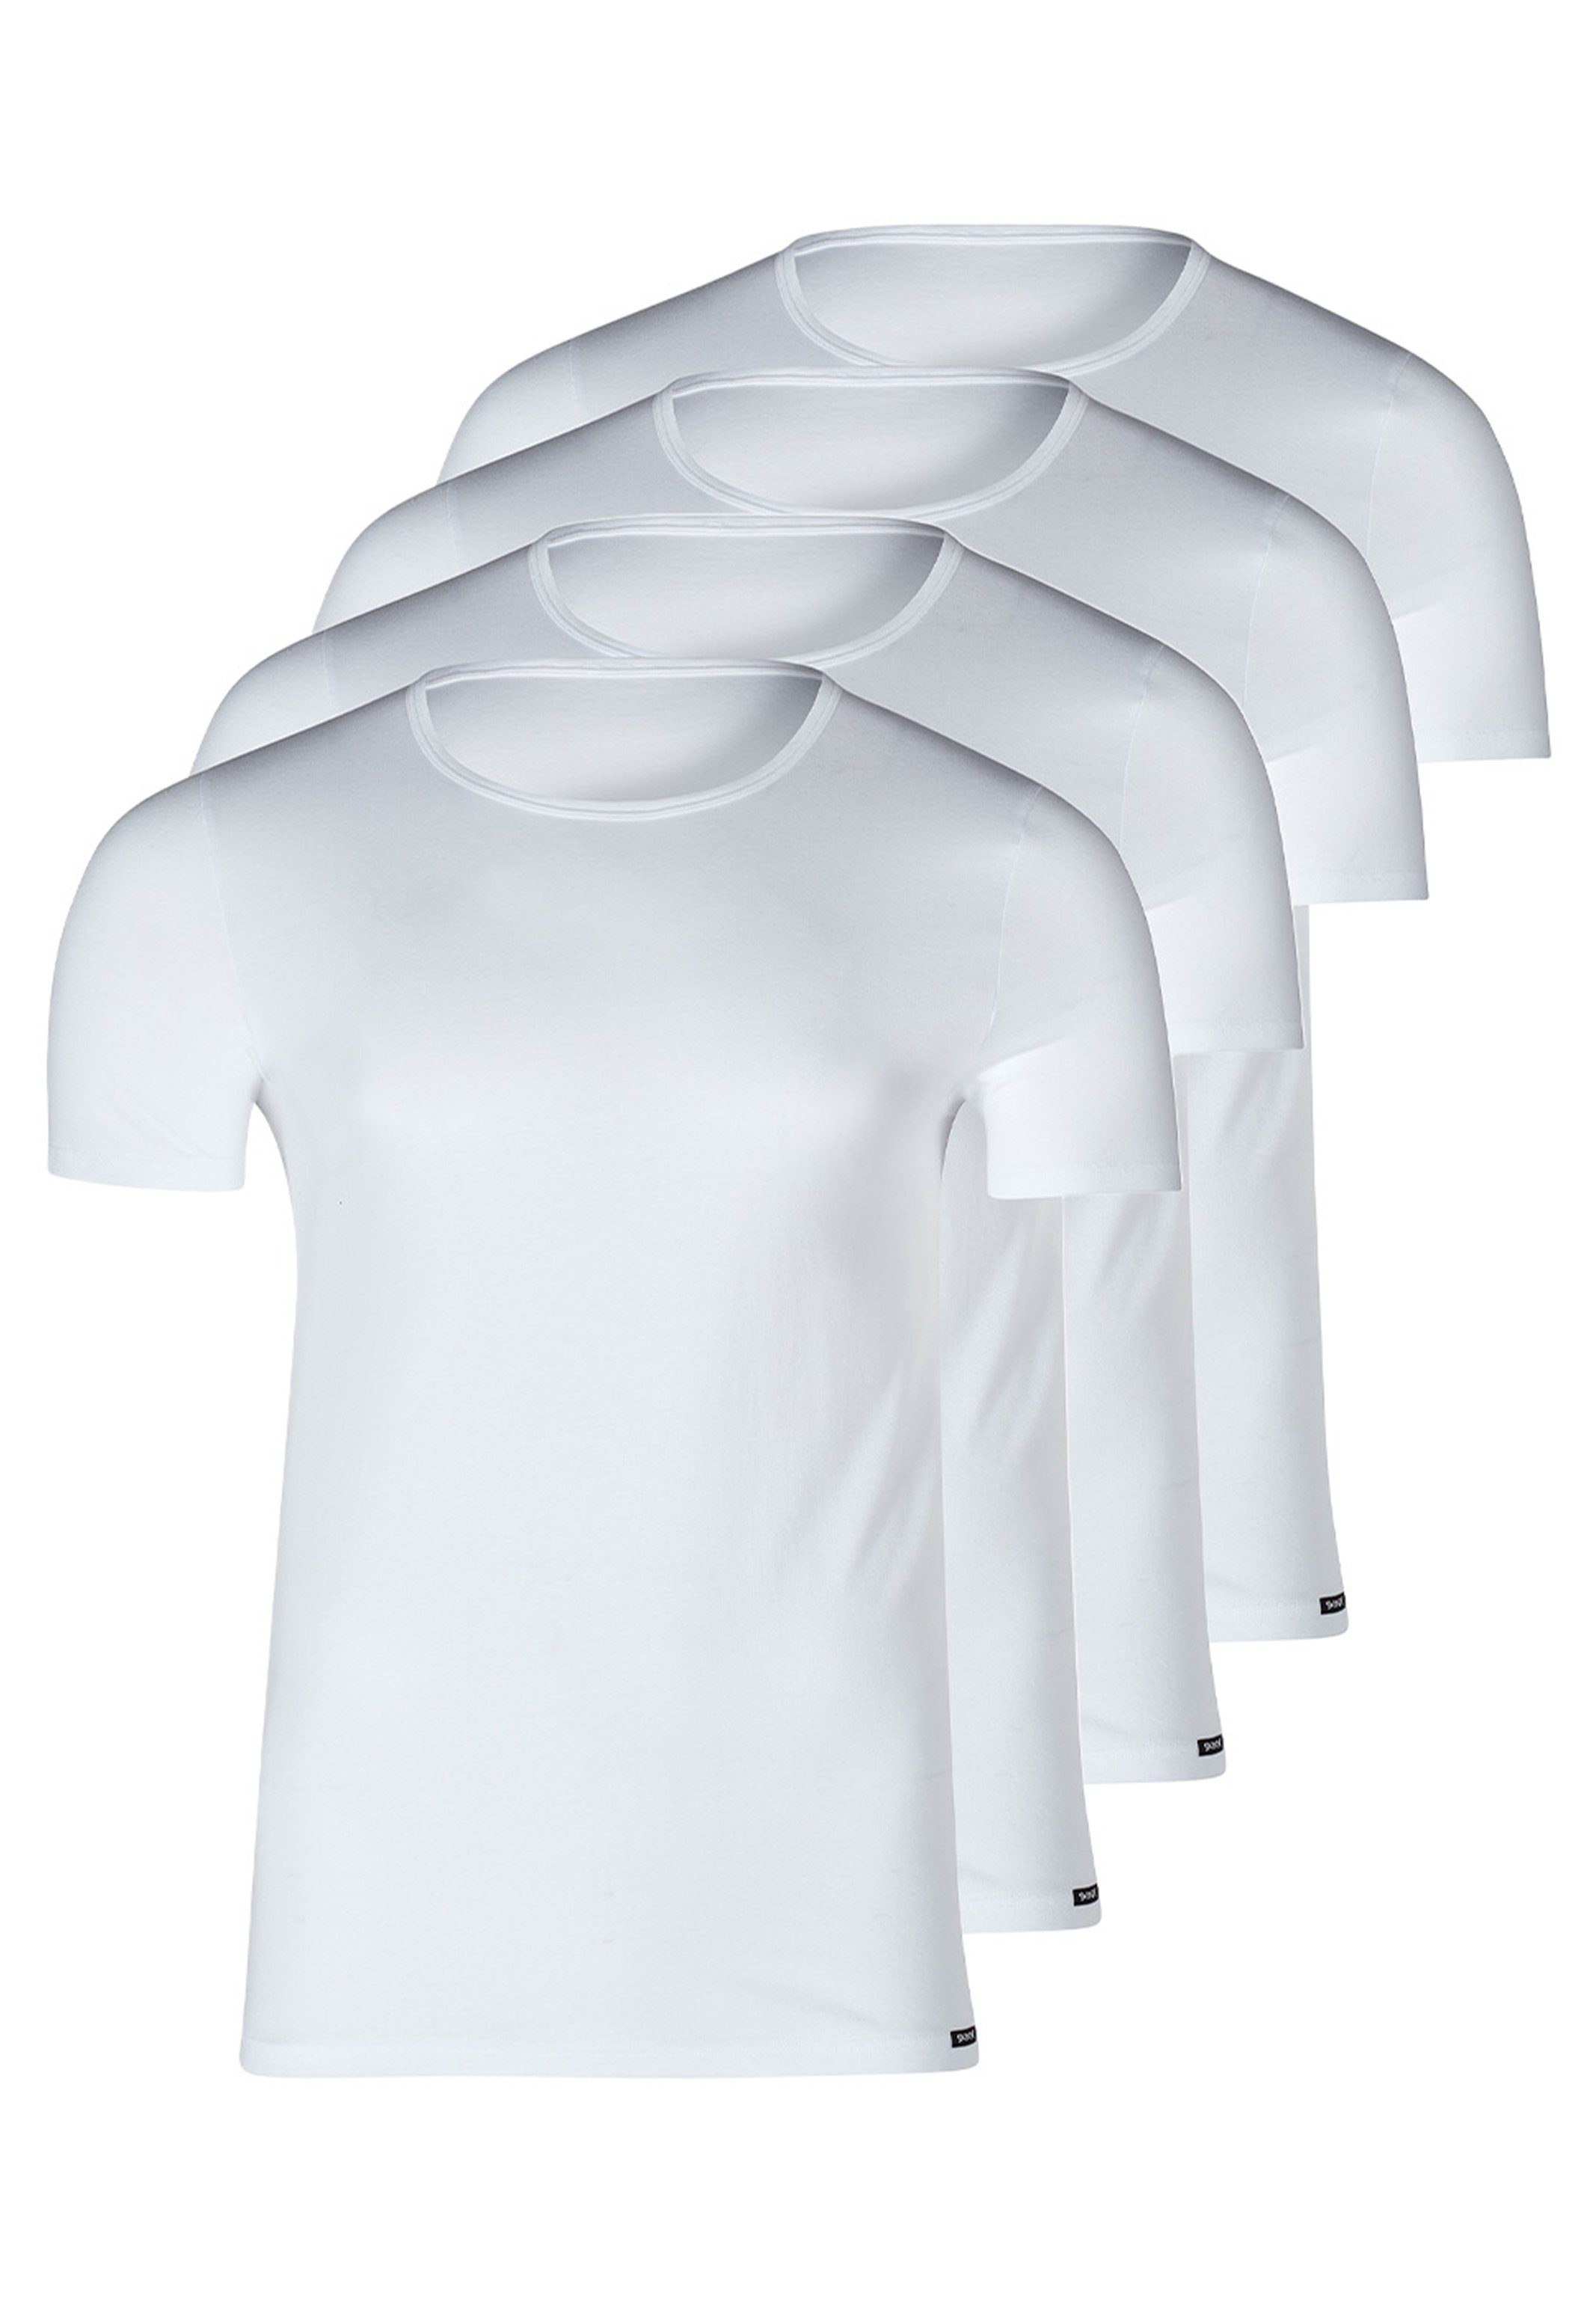 Skiny Unterhemd 4er Pack Unterhemd / Shirt Kurzarm (Spar-Set, 4-St) Unterhemd / Shirt Kurzarm - Baumwolle - T-Shirt mit Rundhalsausschnitt